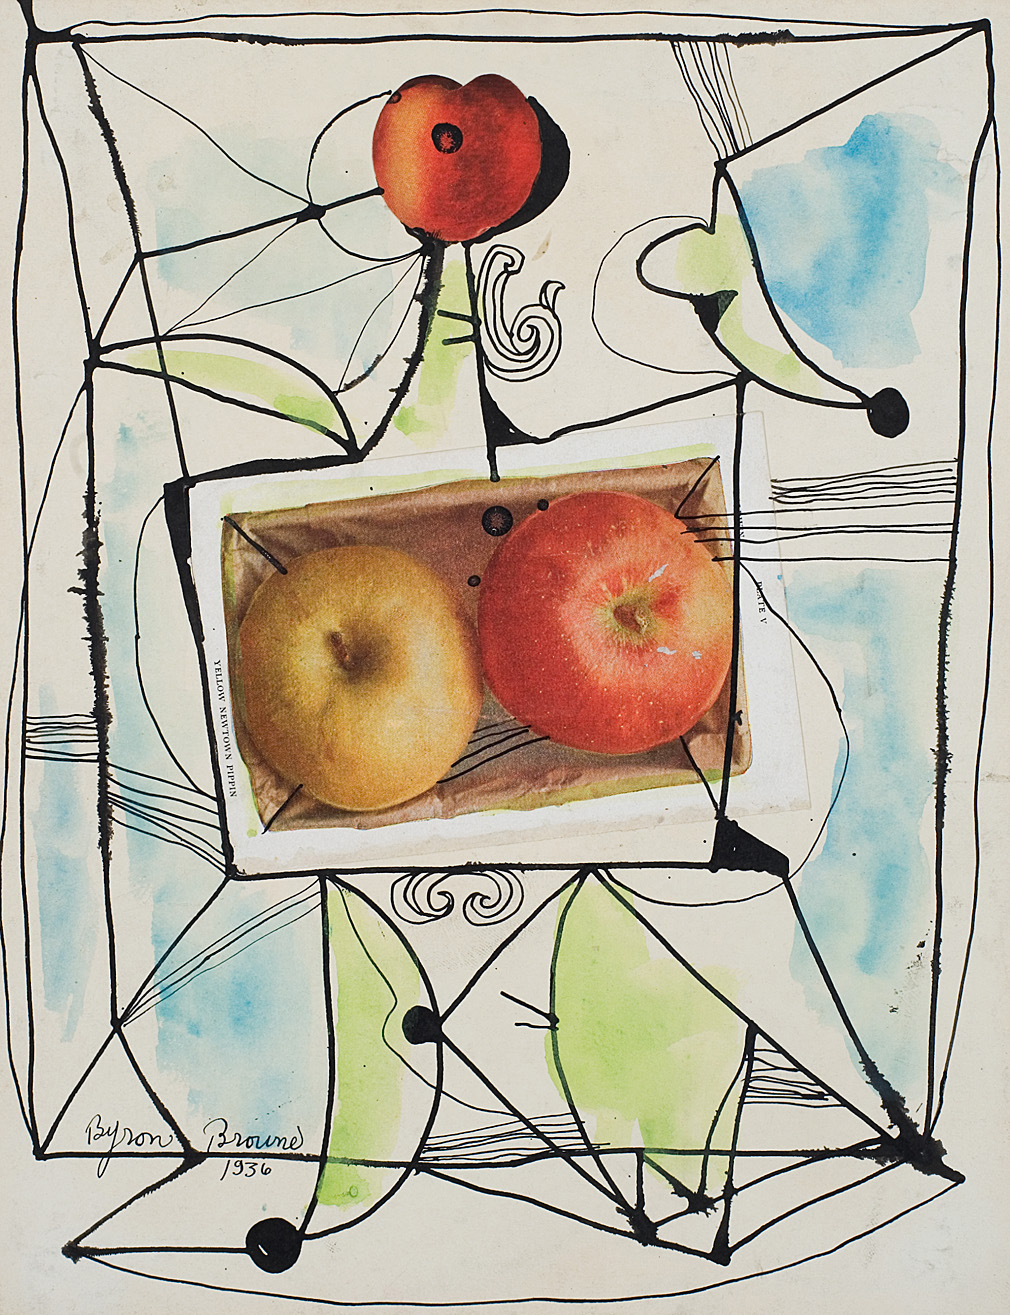 Byron Browne, A Feast of Apples, 1936